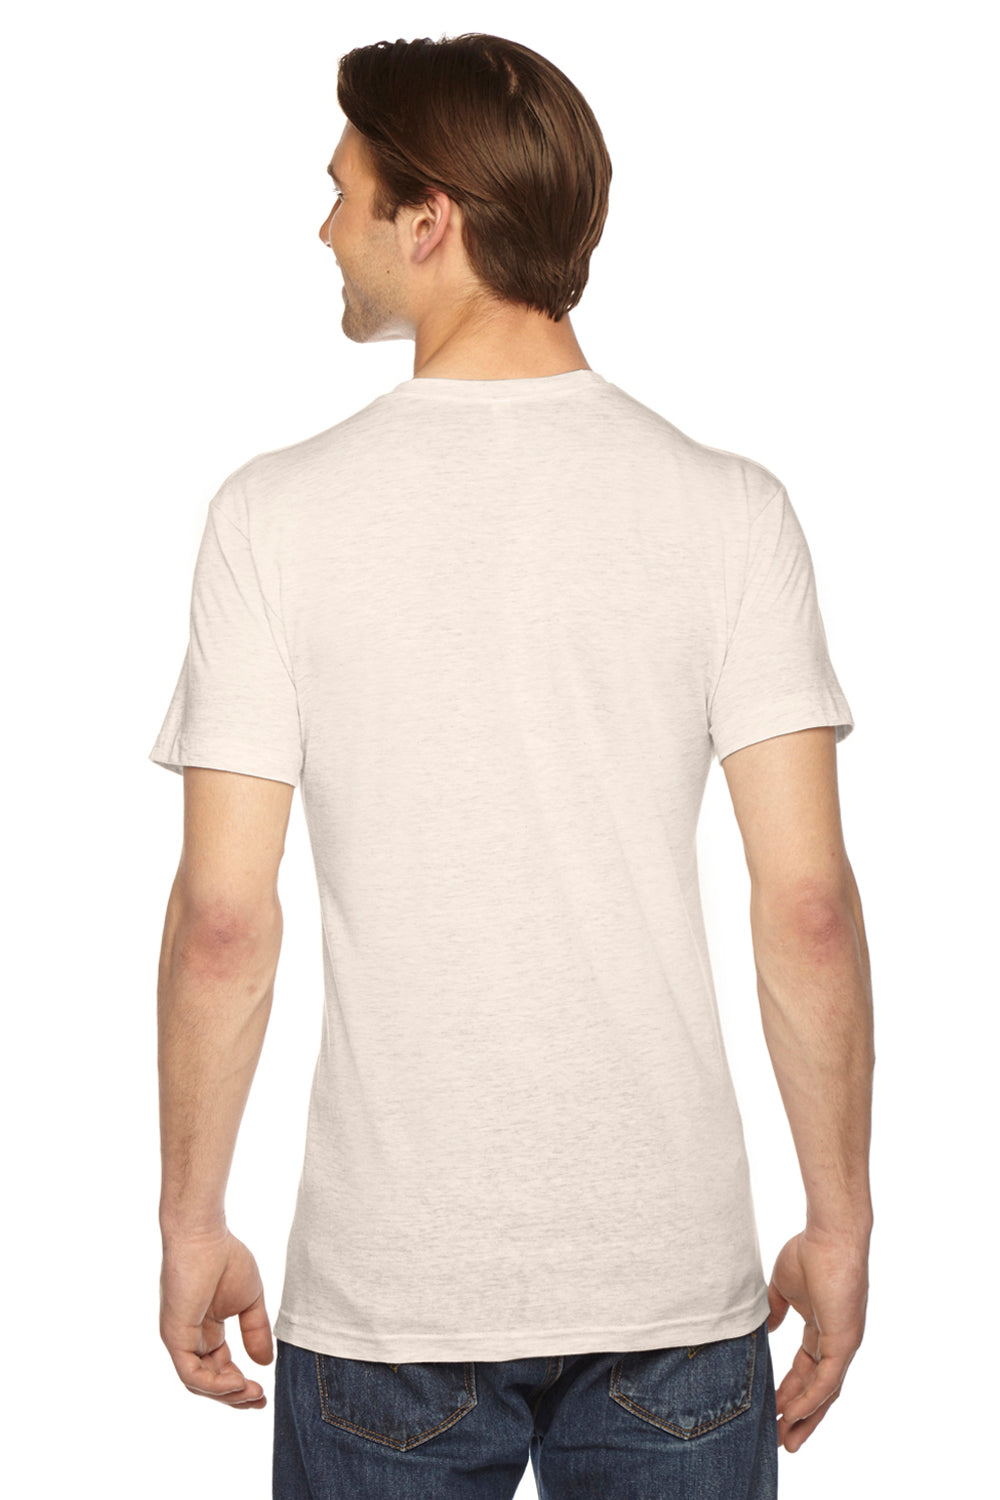 American Apparel TR401W Mens Track Short Sleeve Crewneck T-Shirt Oatmeal Back